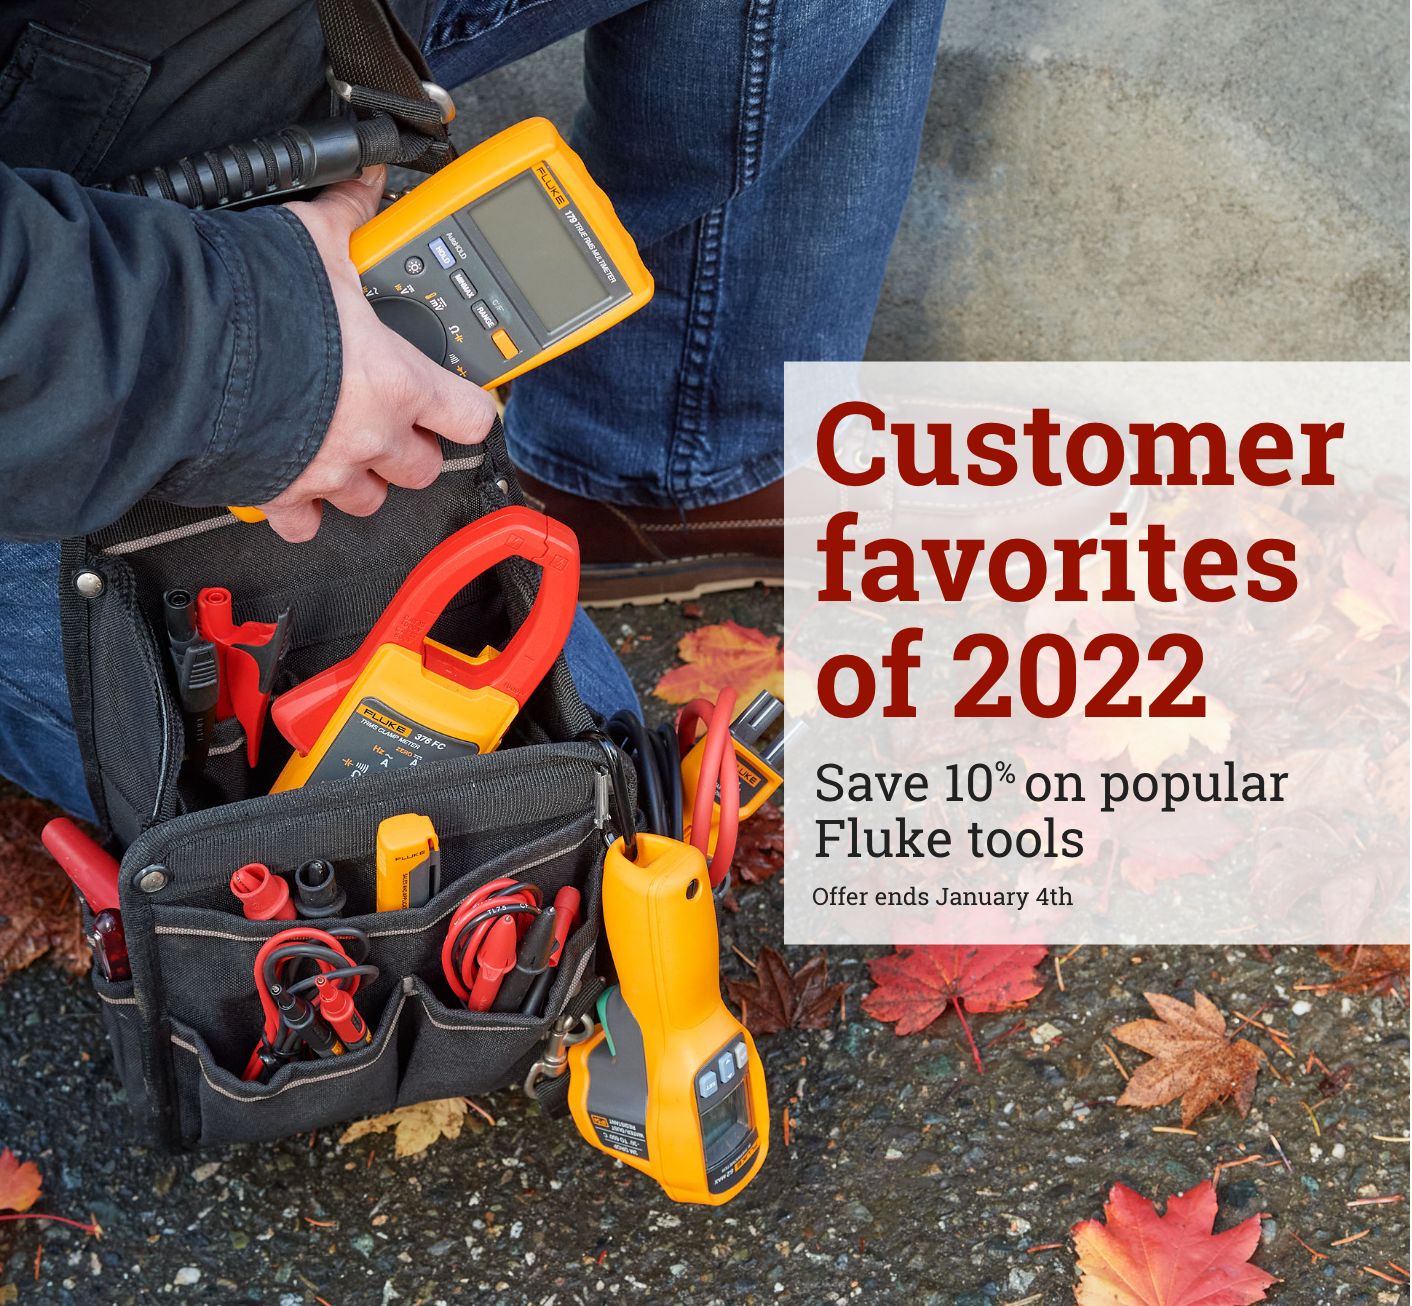 Customer favorites of 2022 - Save 10% on popular Fluke tools